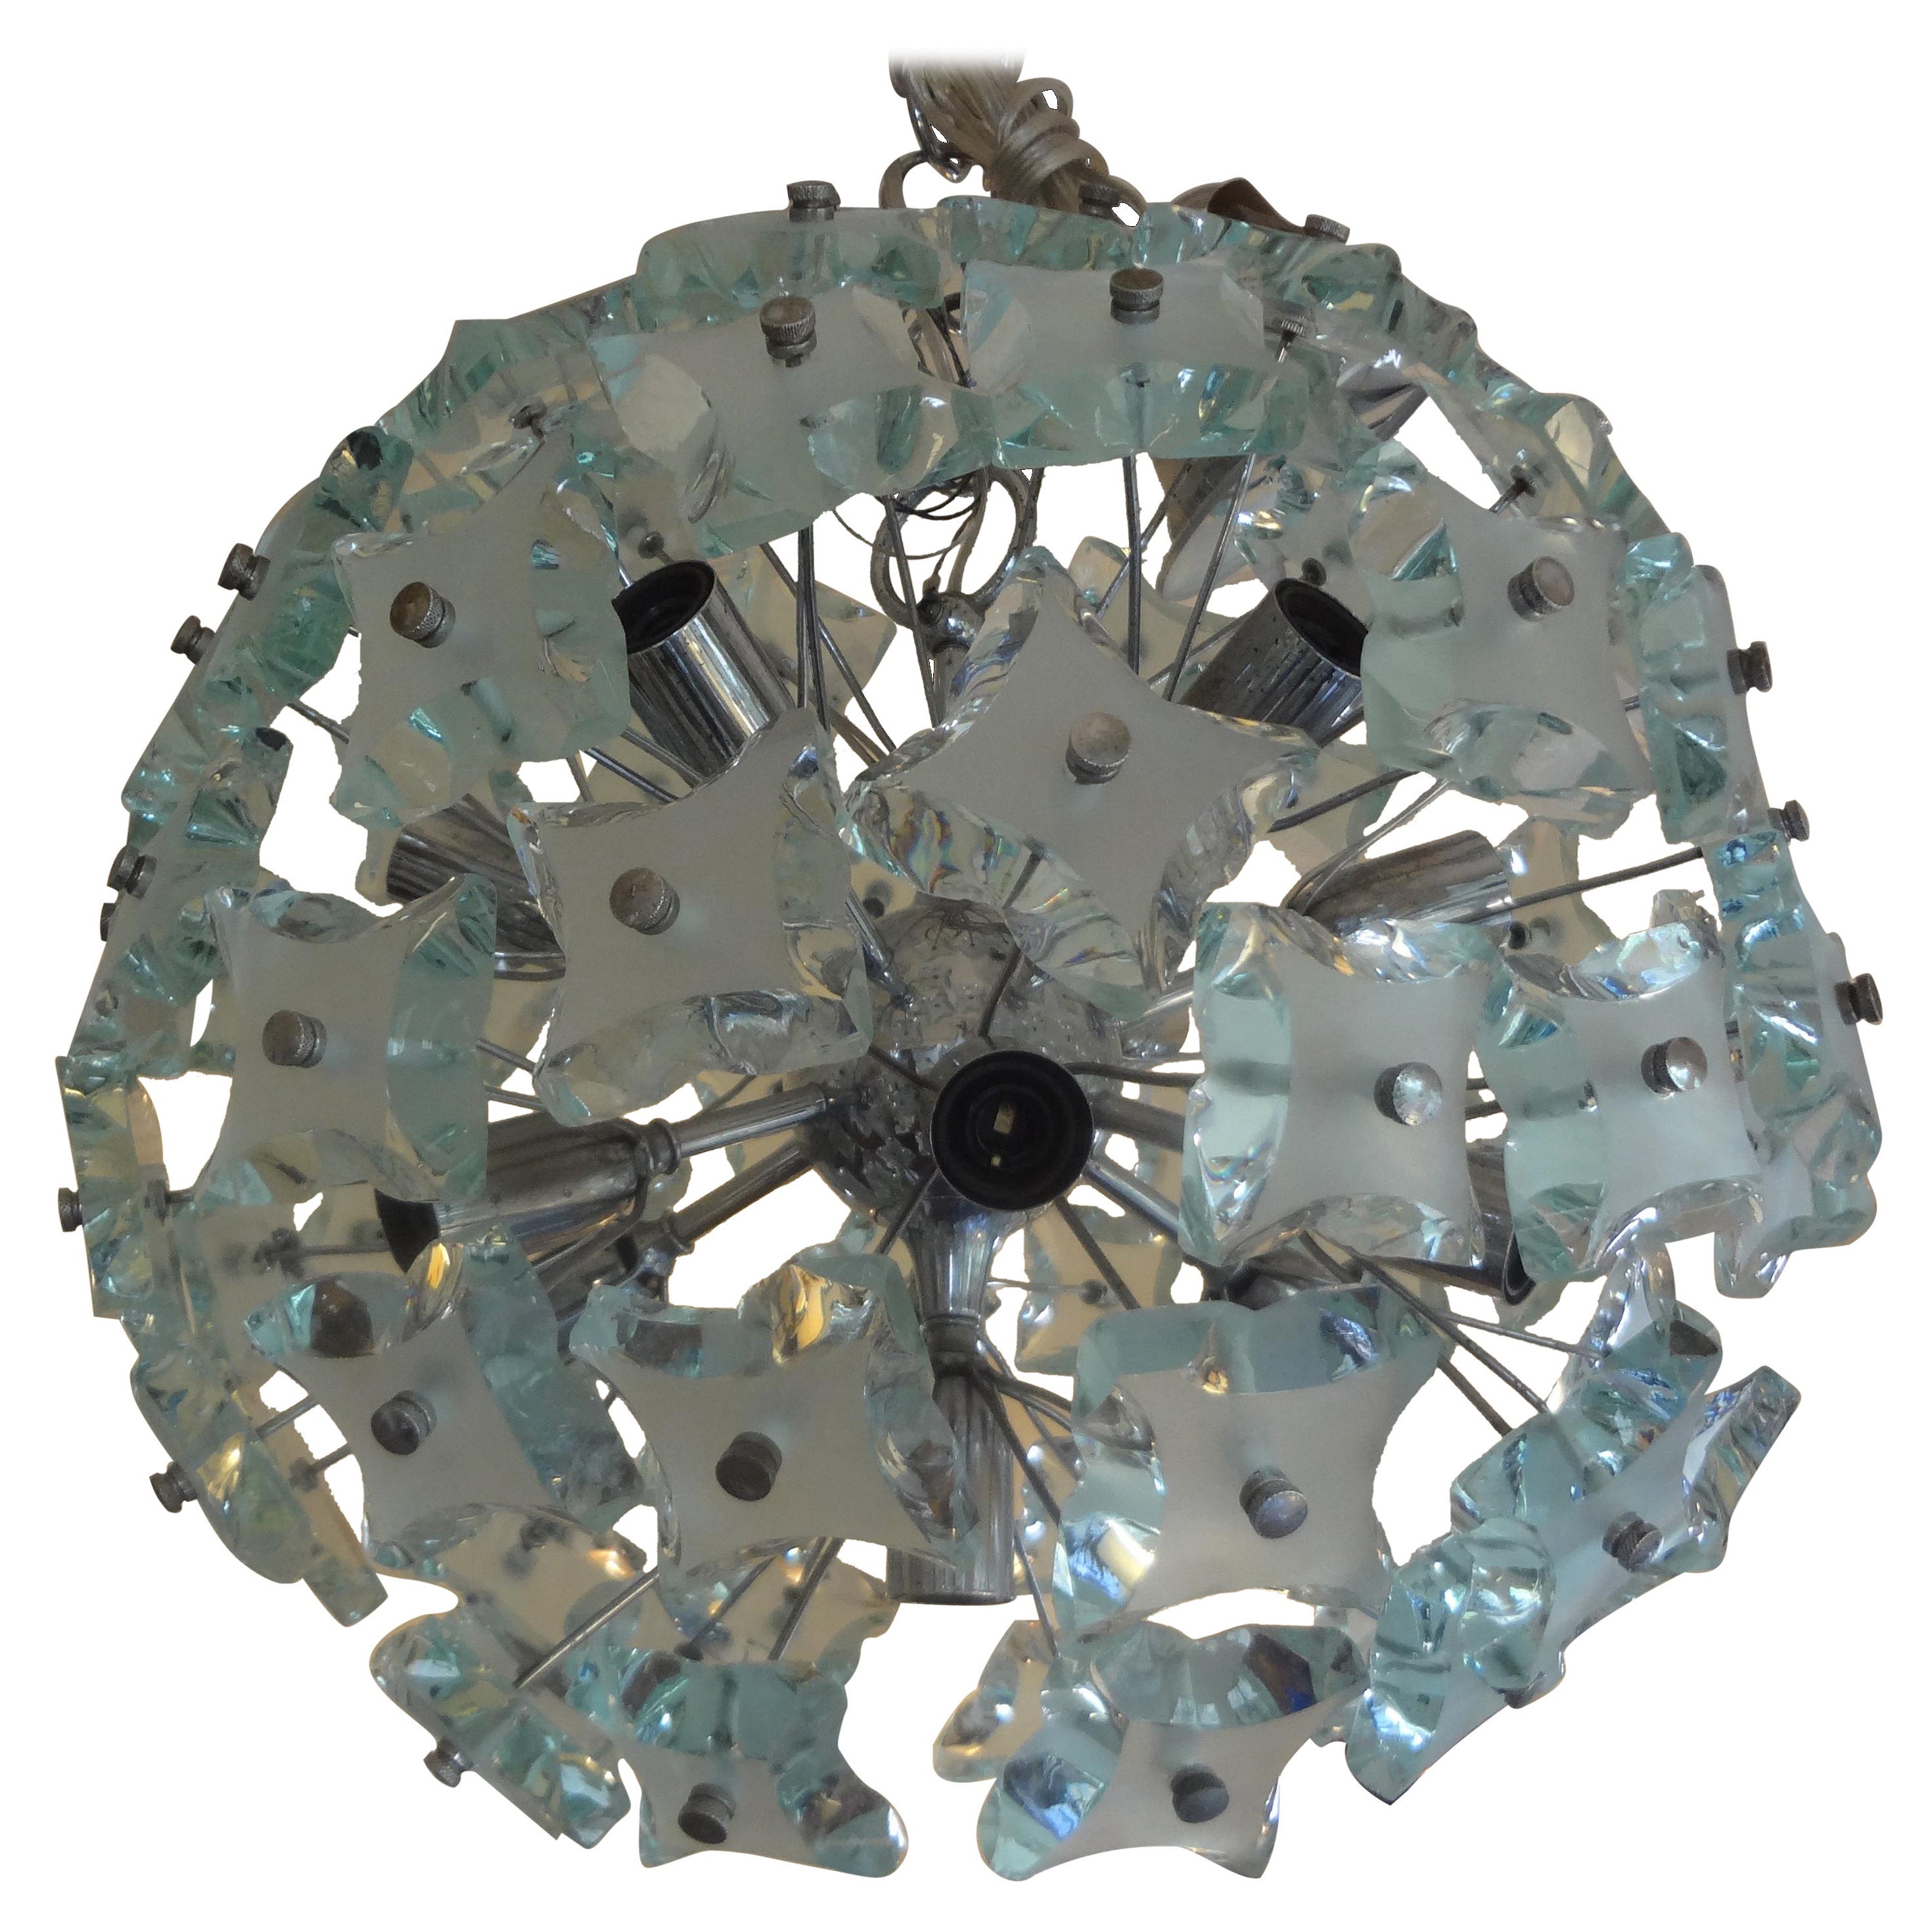 Italian Zero Quattro-Fontana Arte Frosted Glass Sphere Chandelier or Pendant